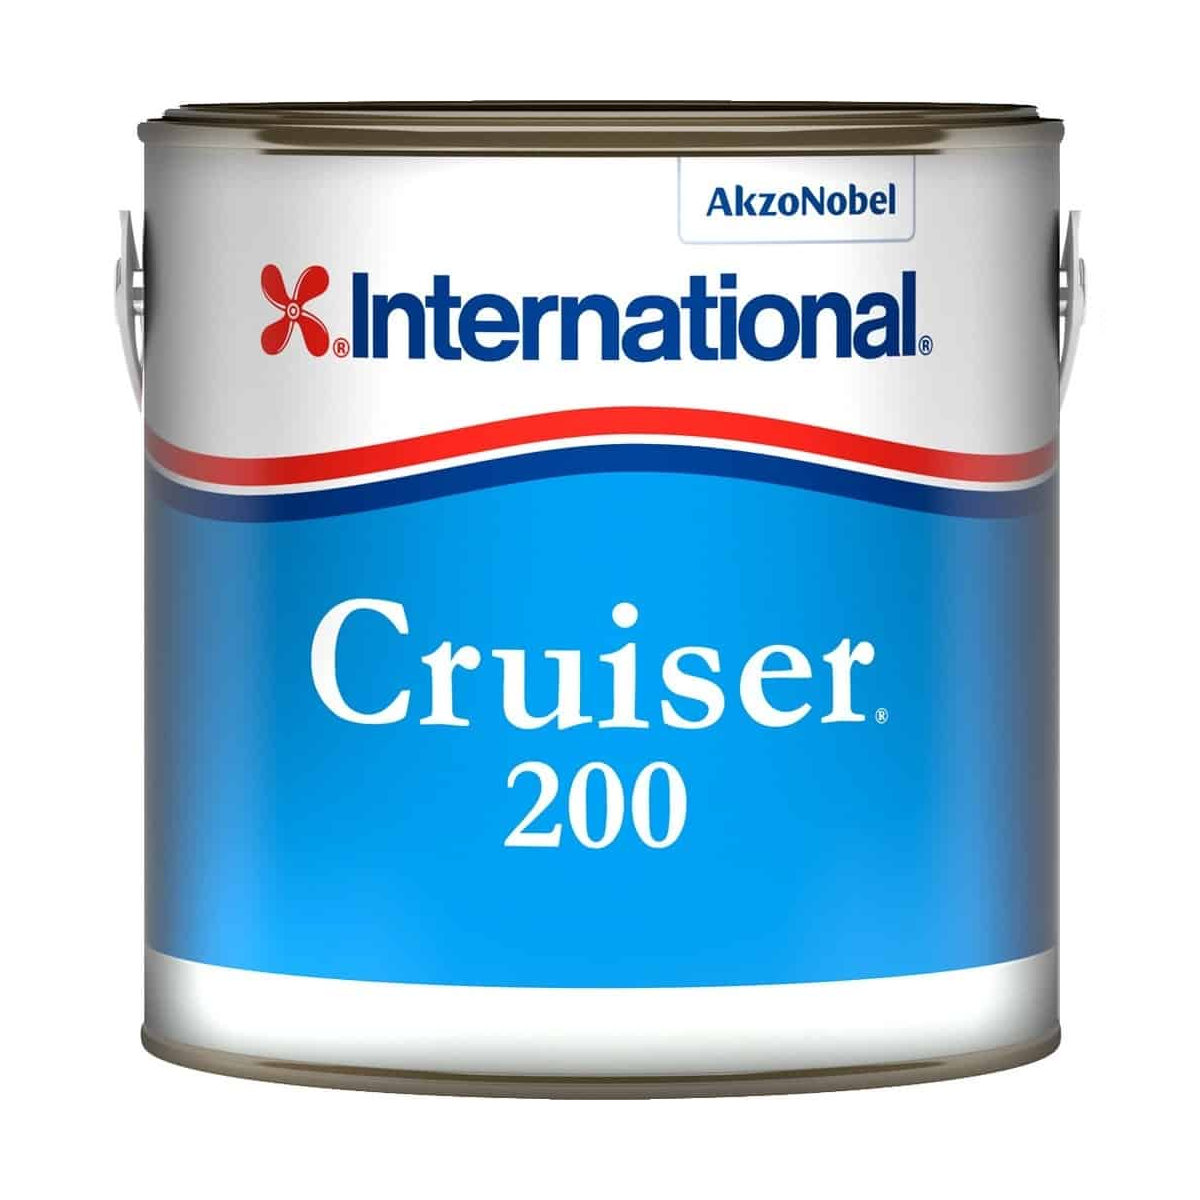 Cruiser 200